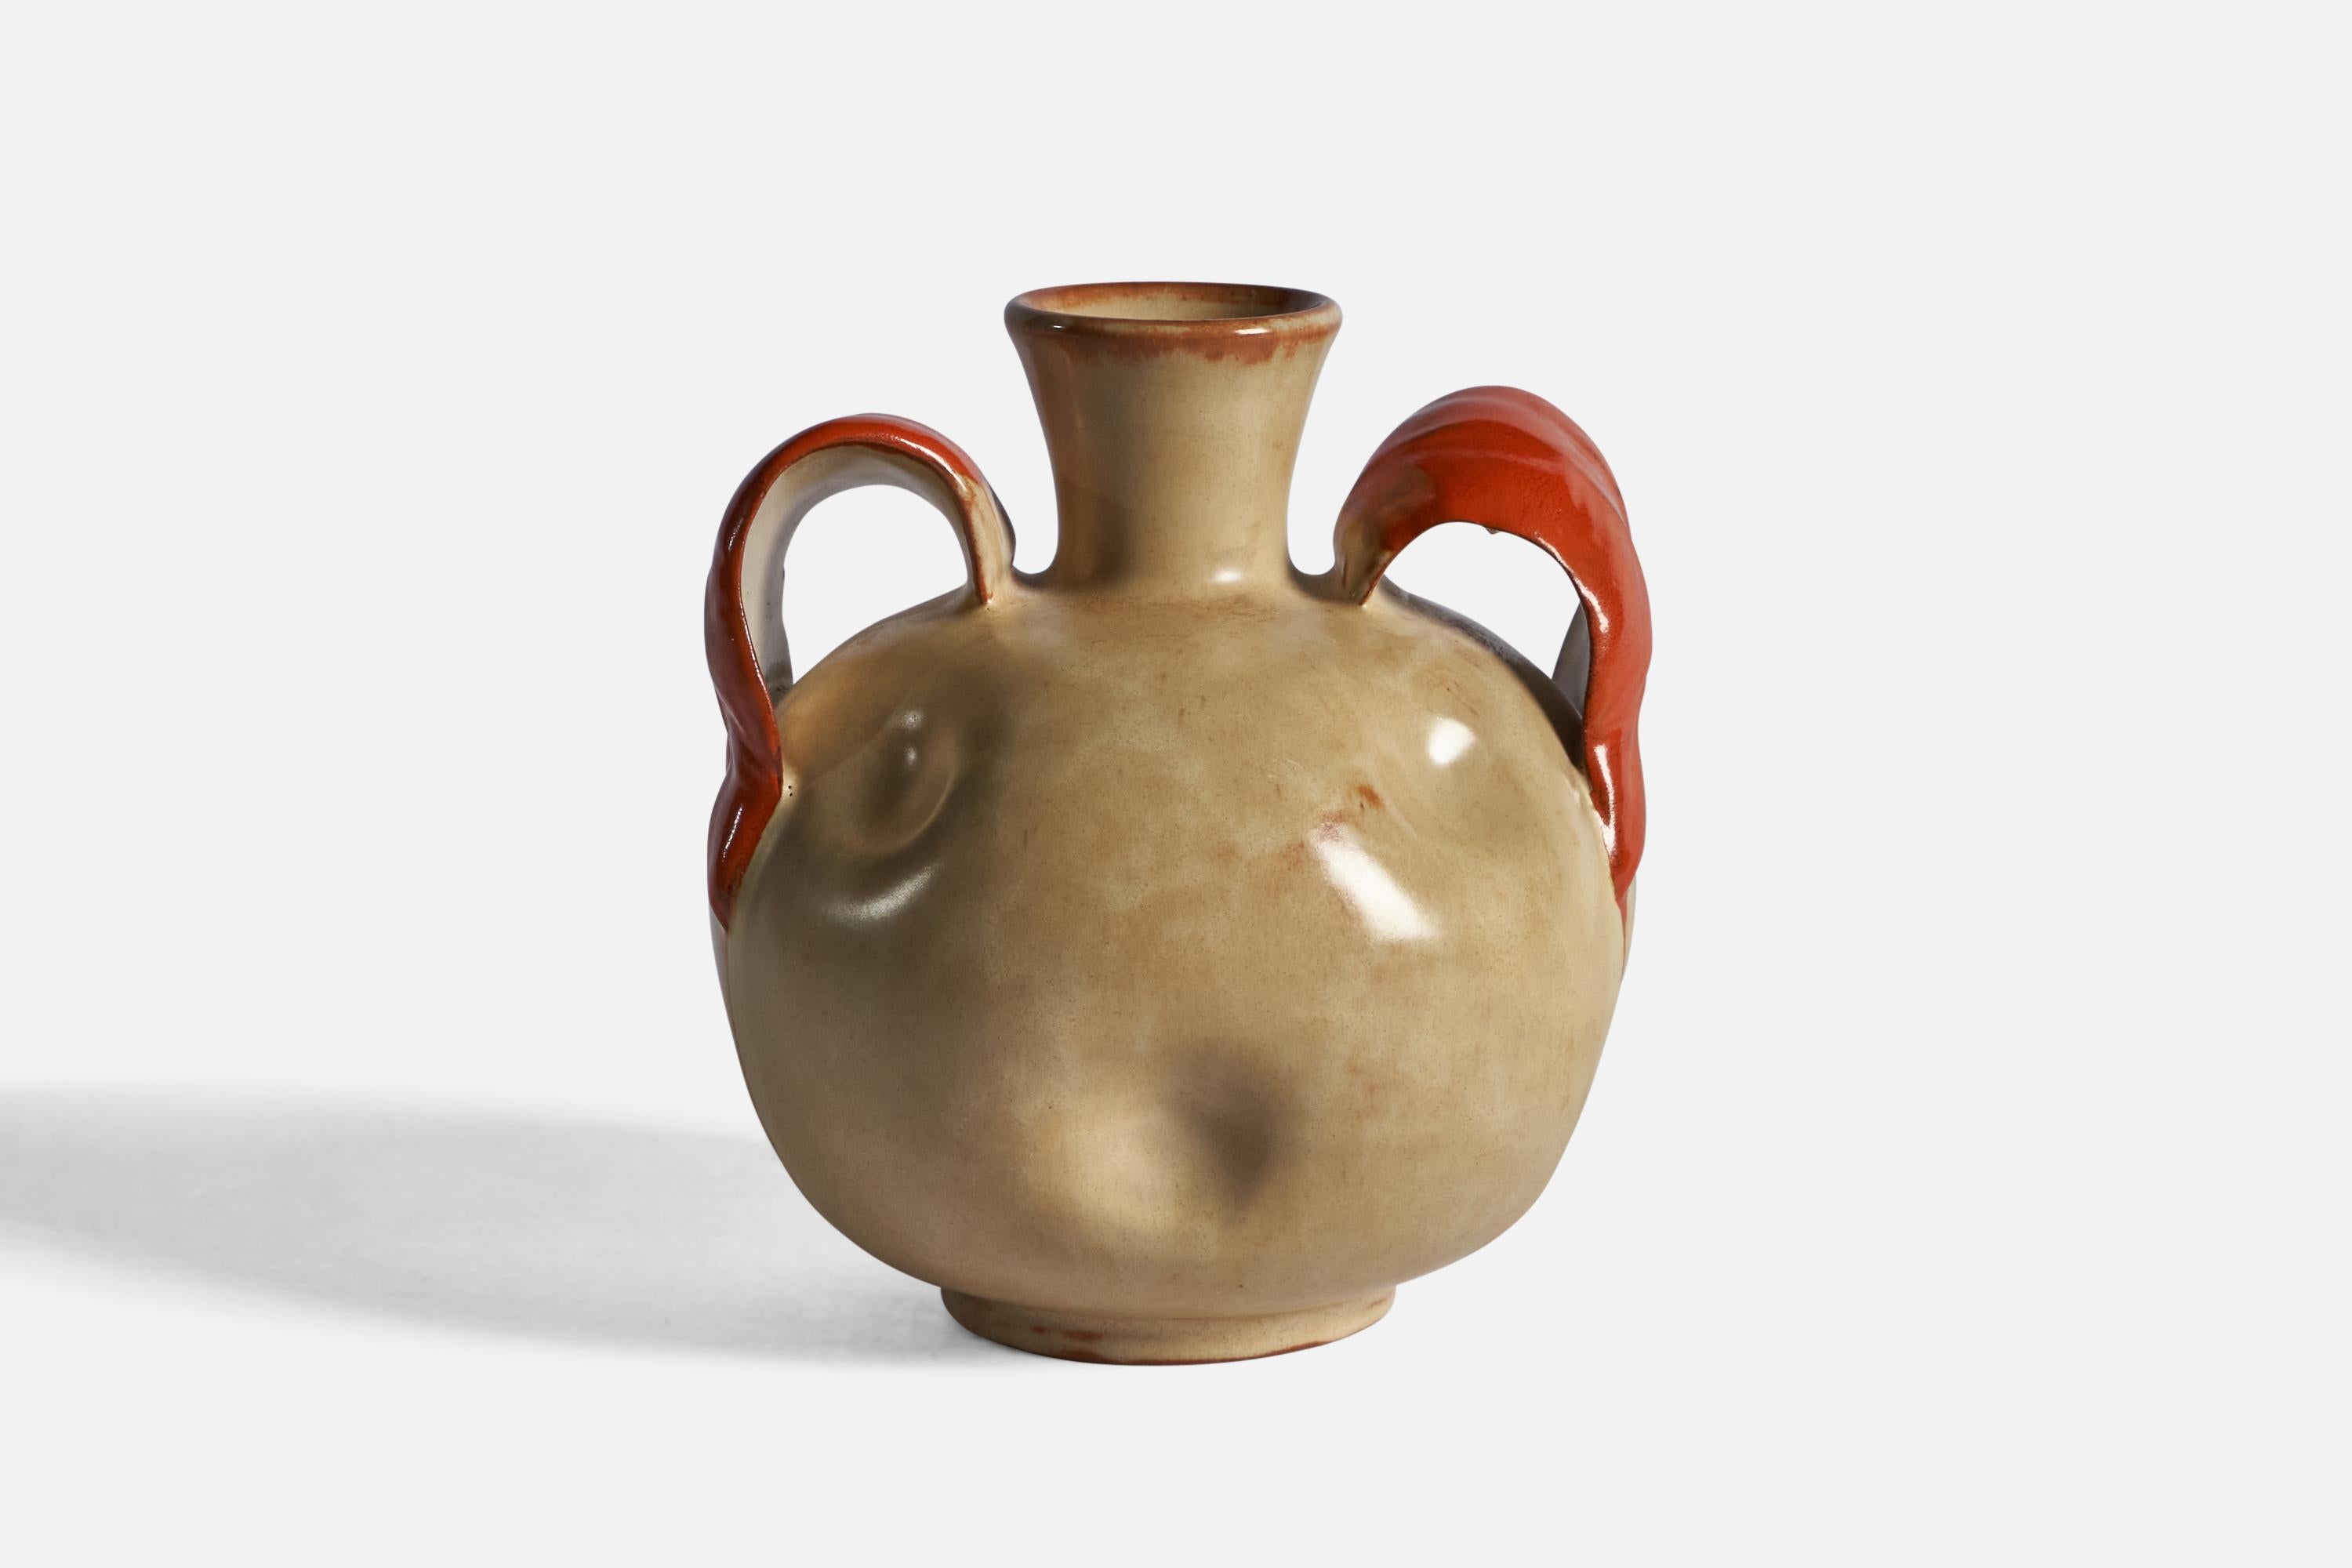 A beige and orange-glazed earthenware vase, designed and produced by Upsala Ekeby, Sweden, c. 1930s.